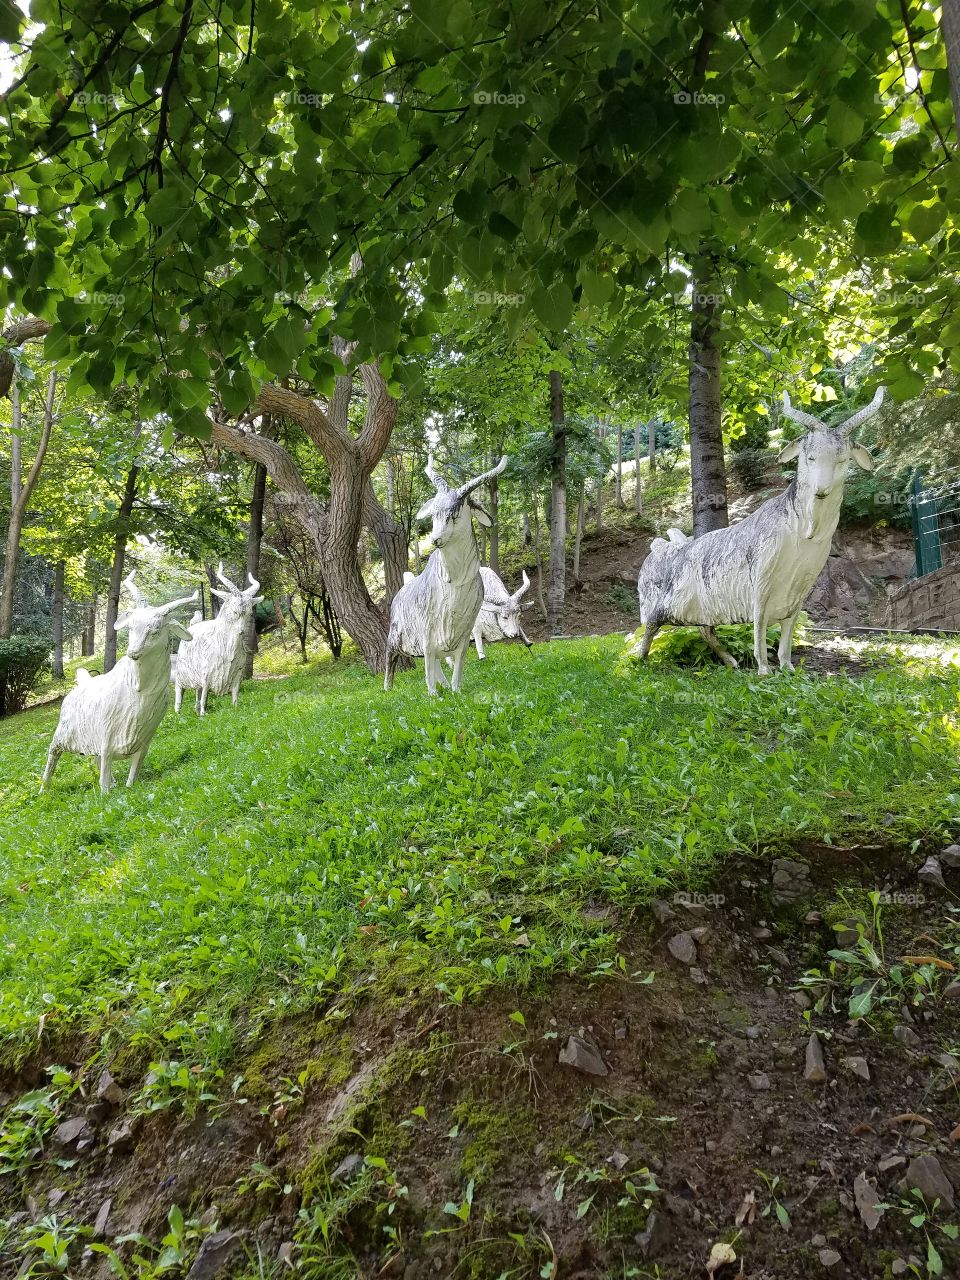 mountain goat sculptures in the hills of the dikman vadesi park in Ankara Turkey